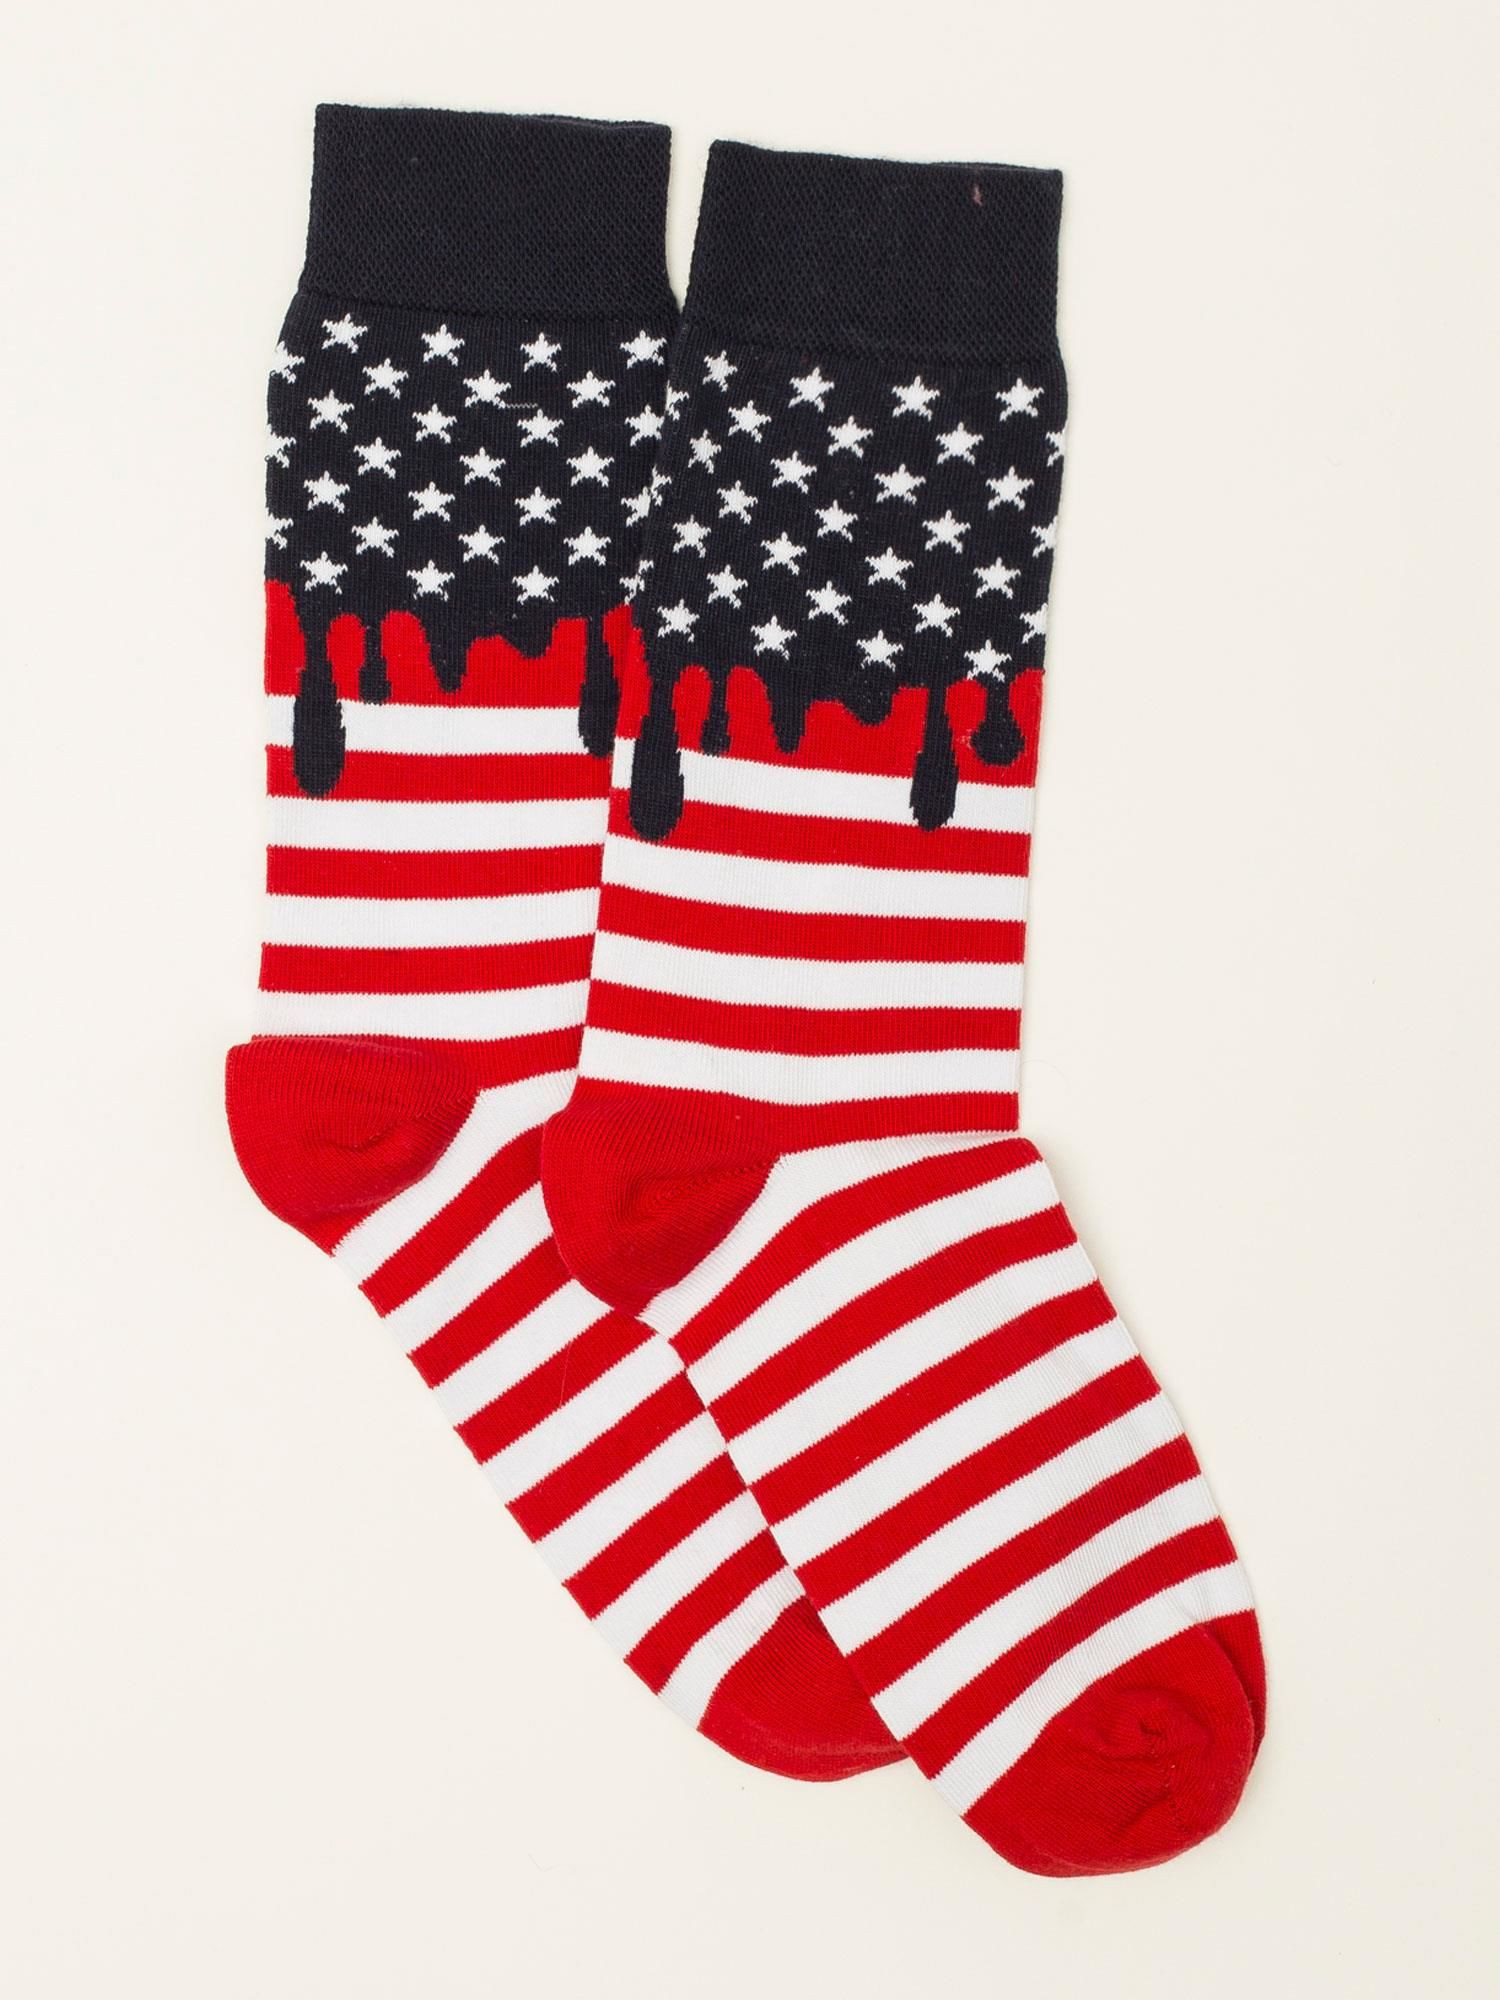 Ponožky WS SR 5686 bílé a červené 41-46